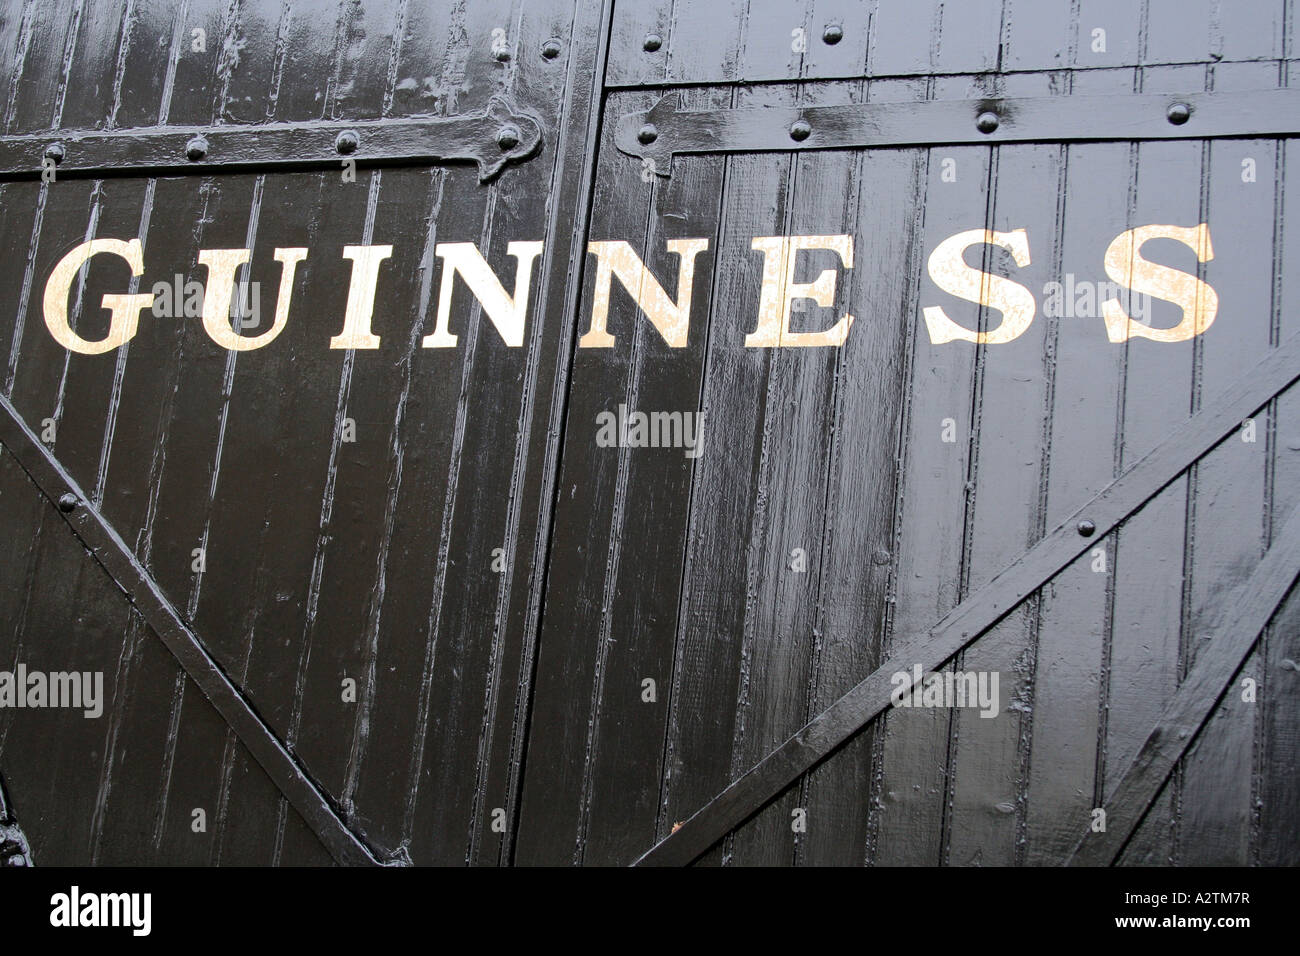 Guinness San Jame's Gate Brewery, Dublino Foto Stock